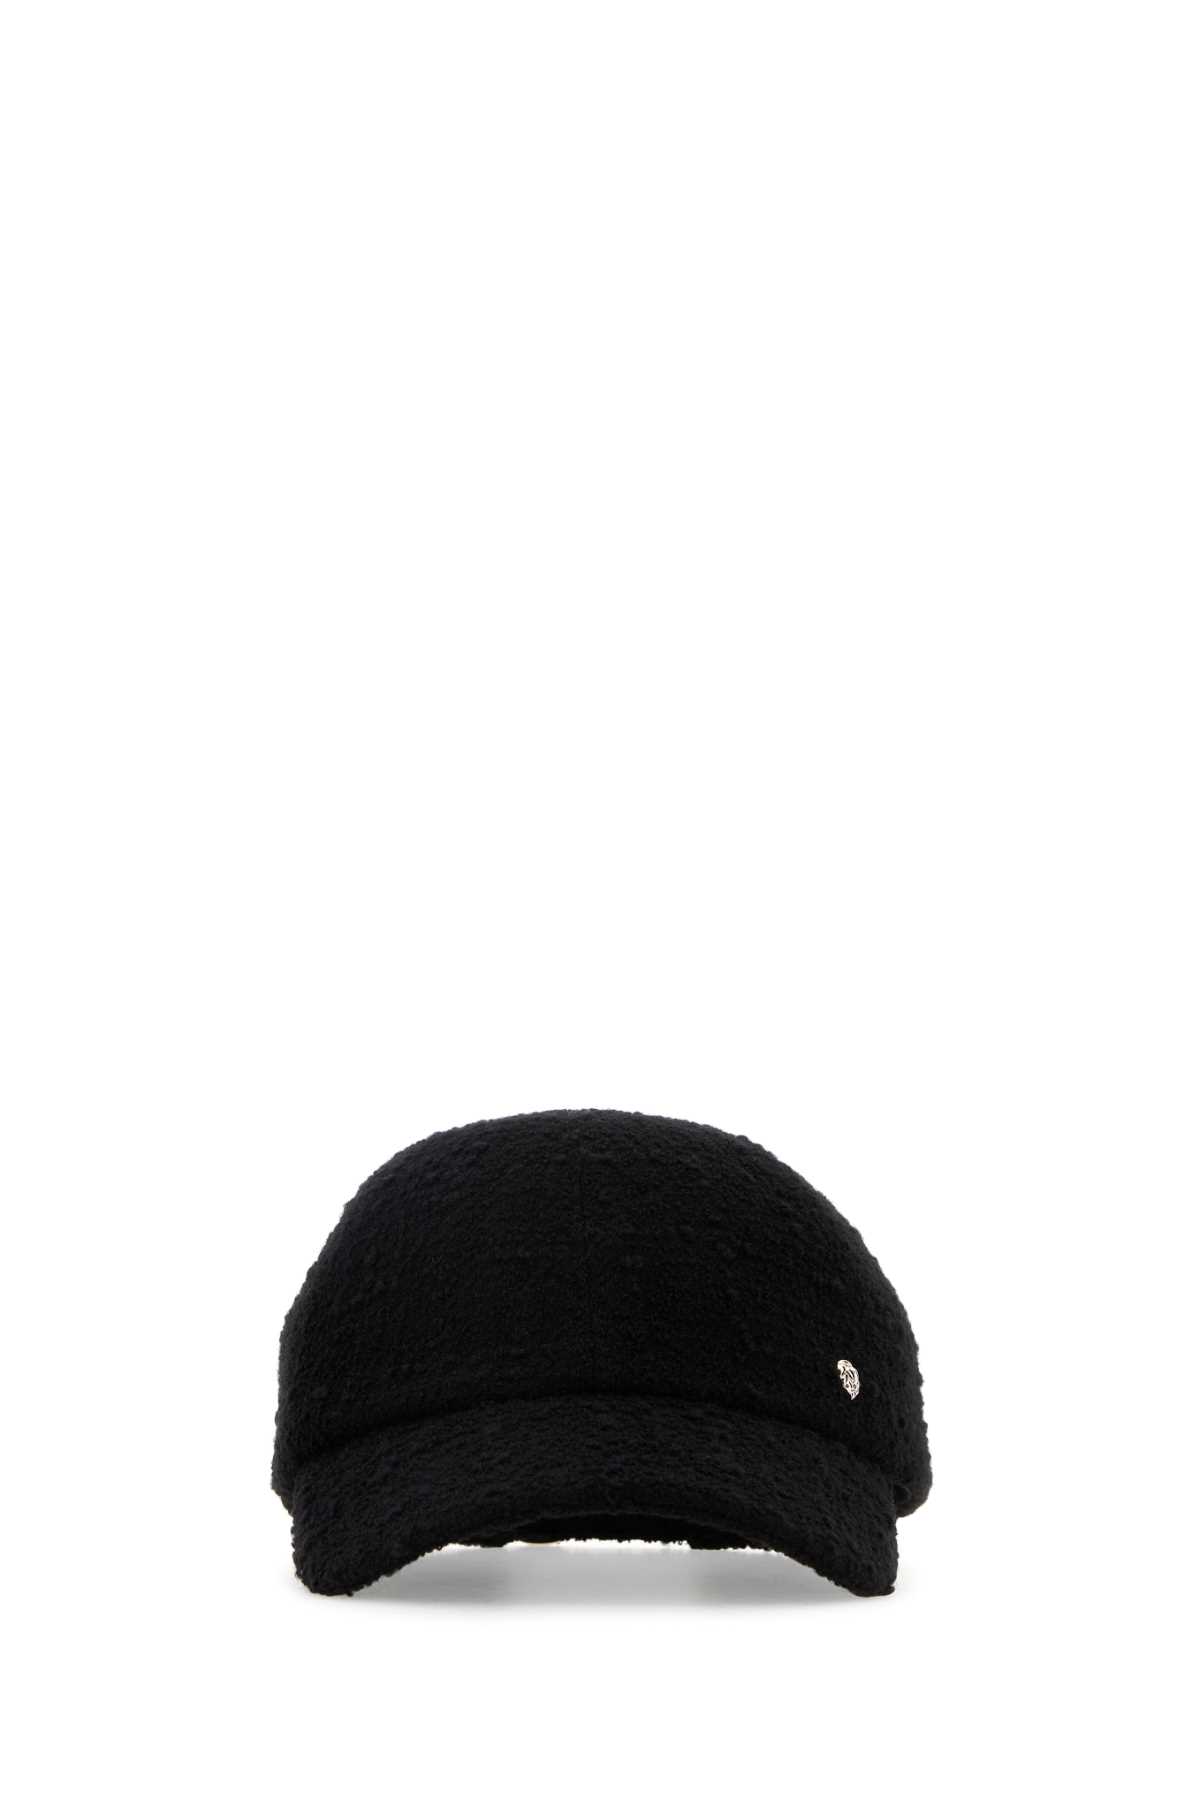 Black Bouclã© Chalamet Baseball Cap